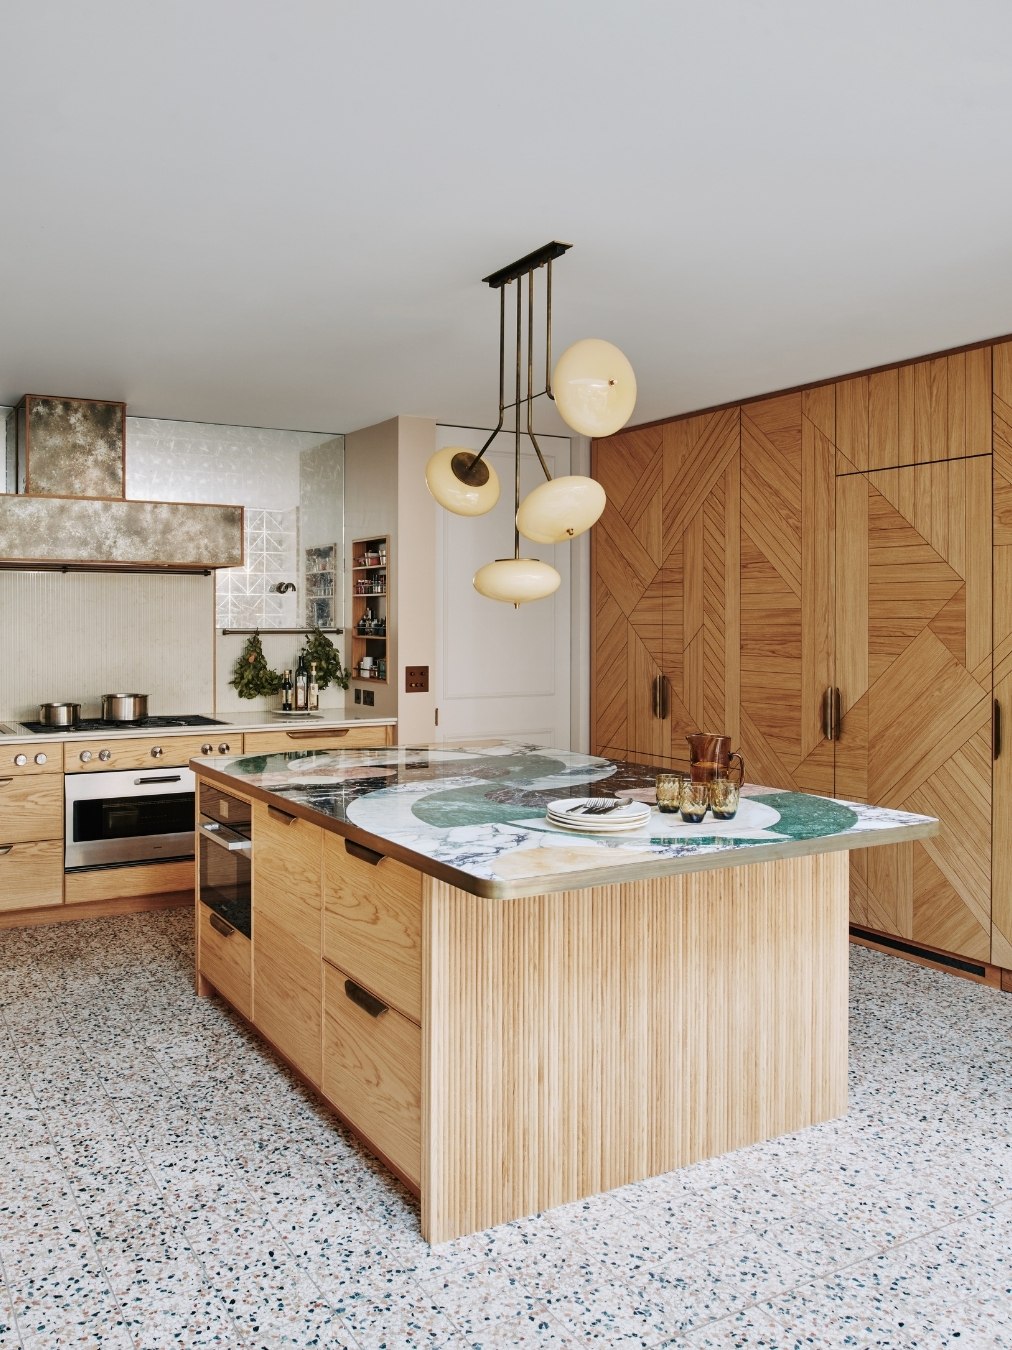 Ledbury Studio's Kitchen Embraces Oak and Metal Contrast | SBID